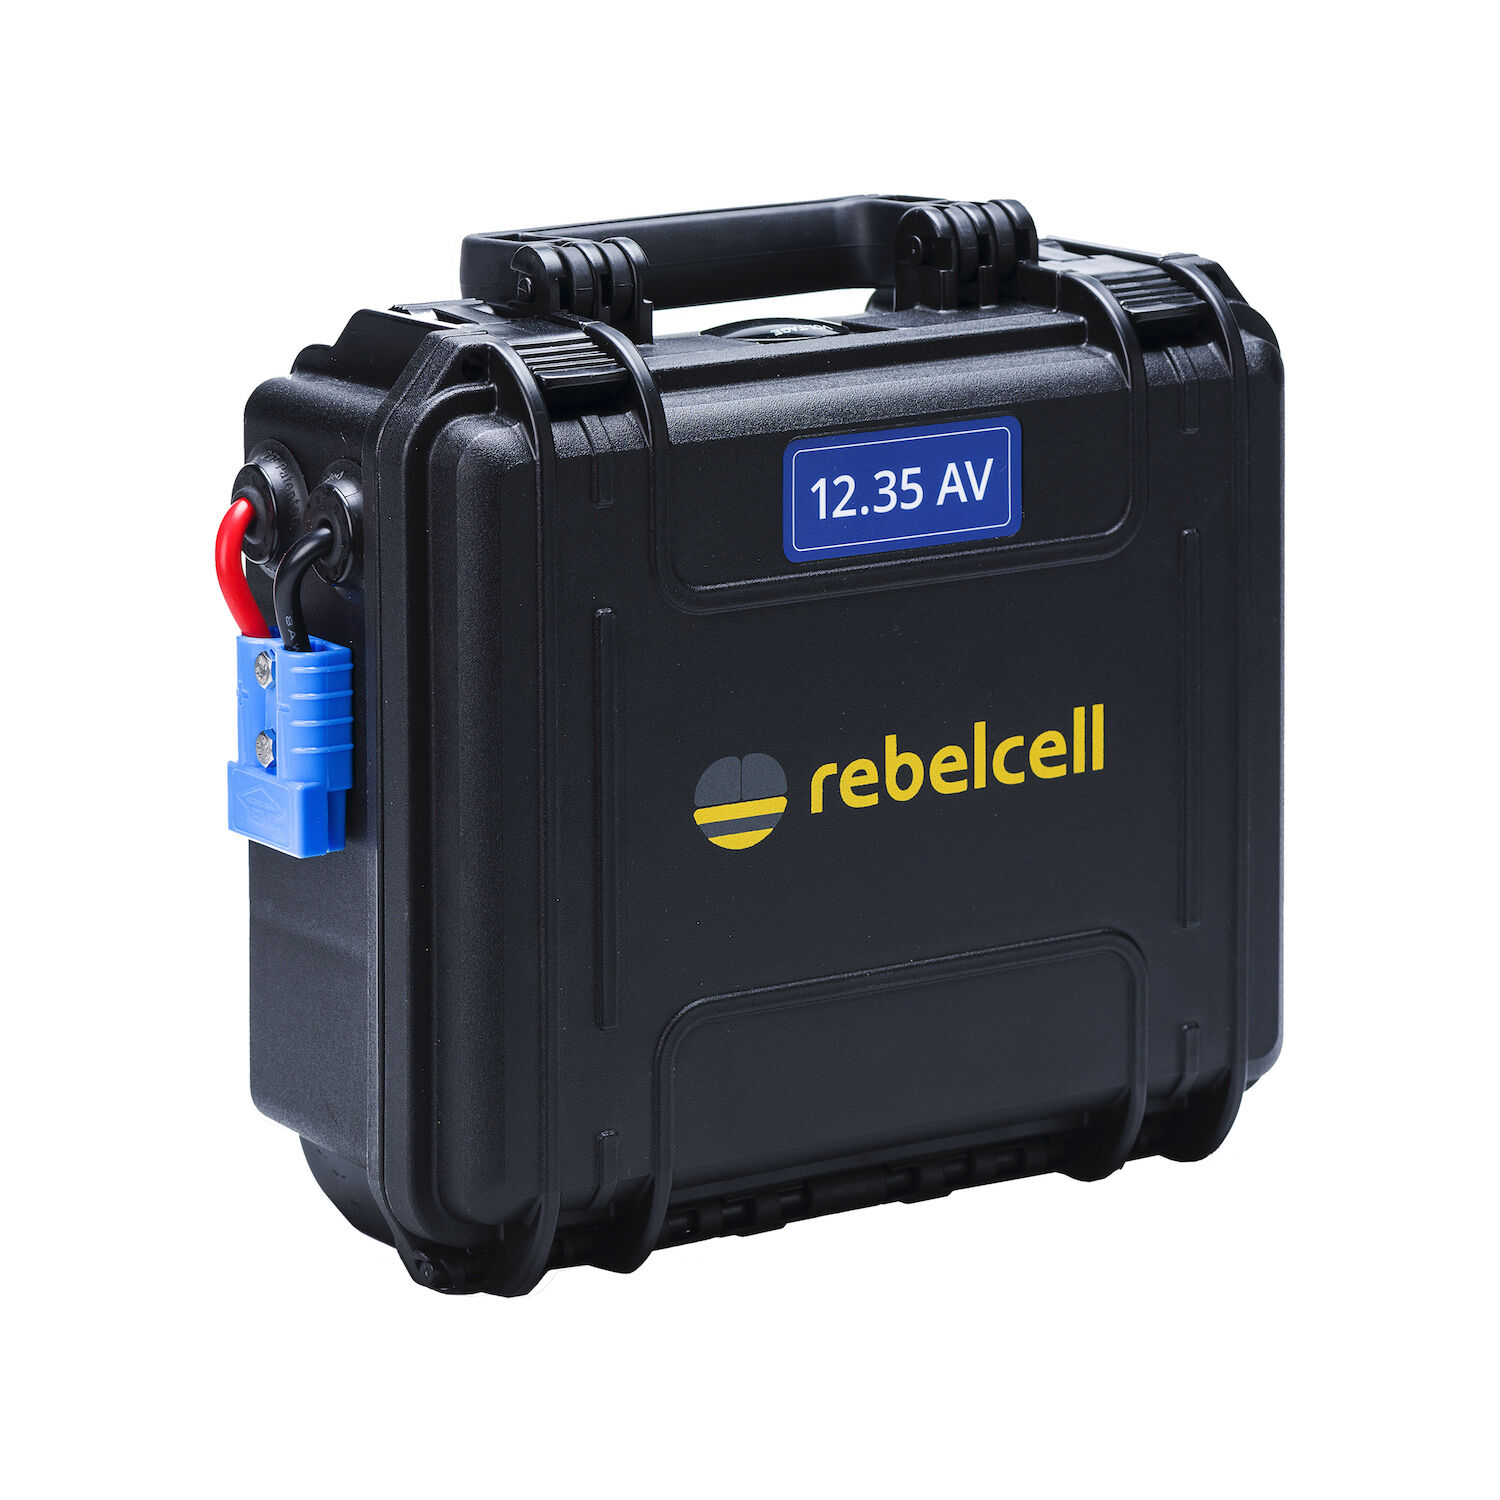 RebelCell Outdoorbox 12.35 AV Koffer mit 12V 35Ah Lithium Batterie (432Wh)